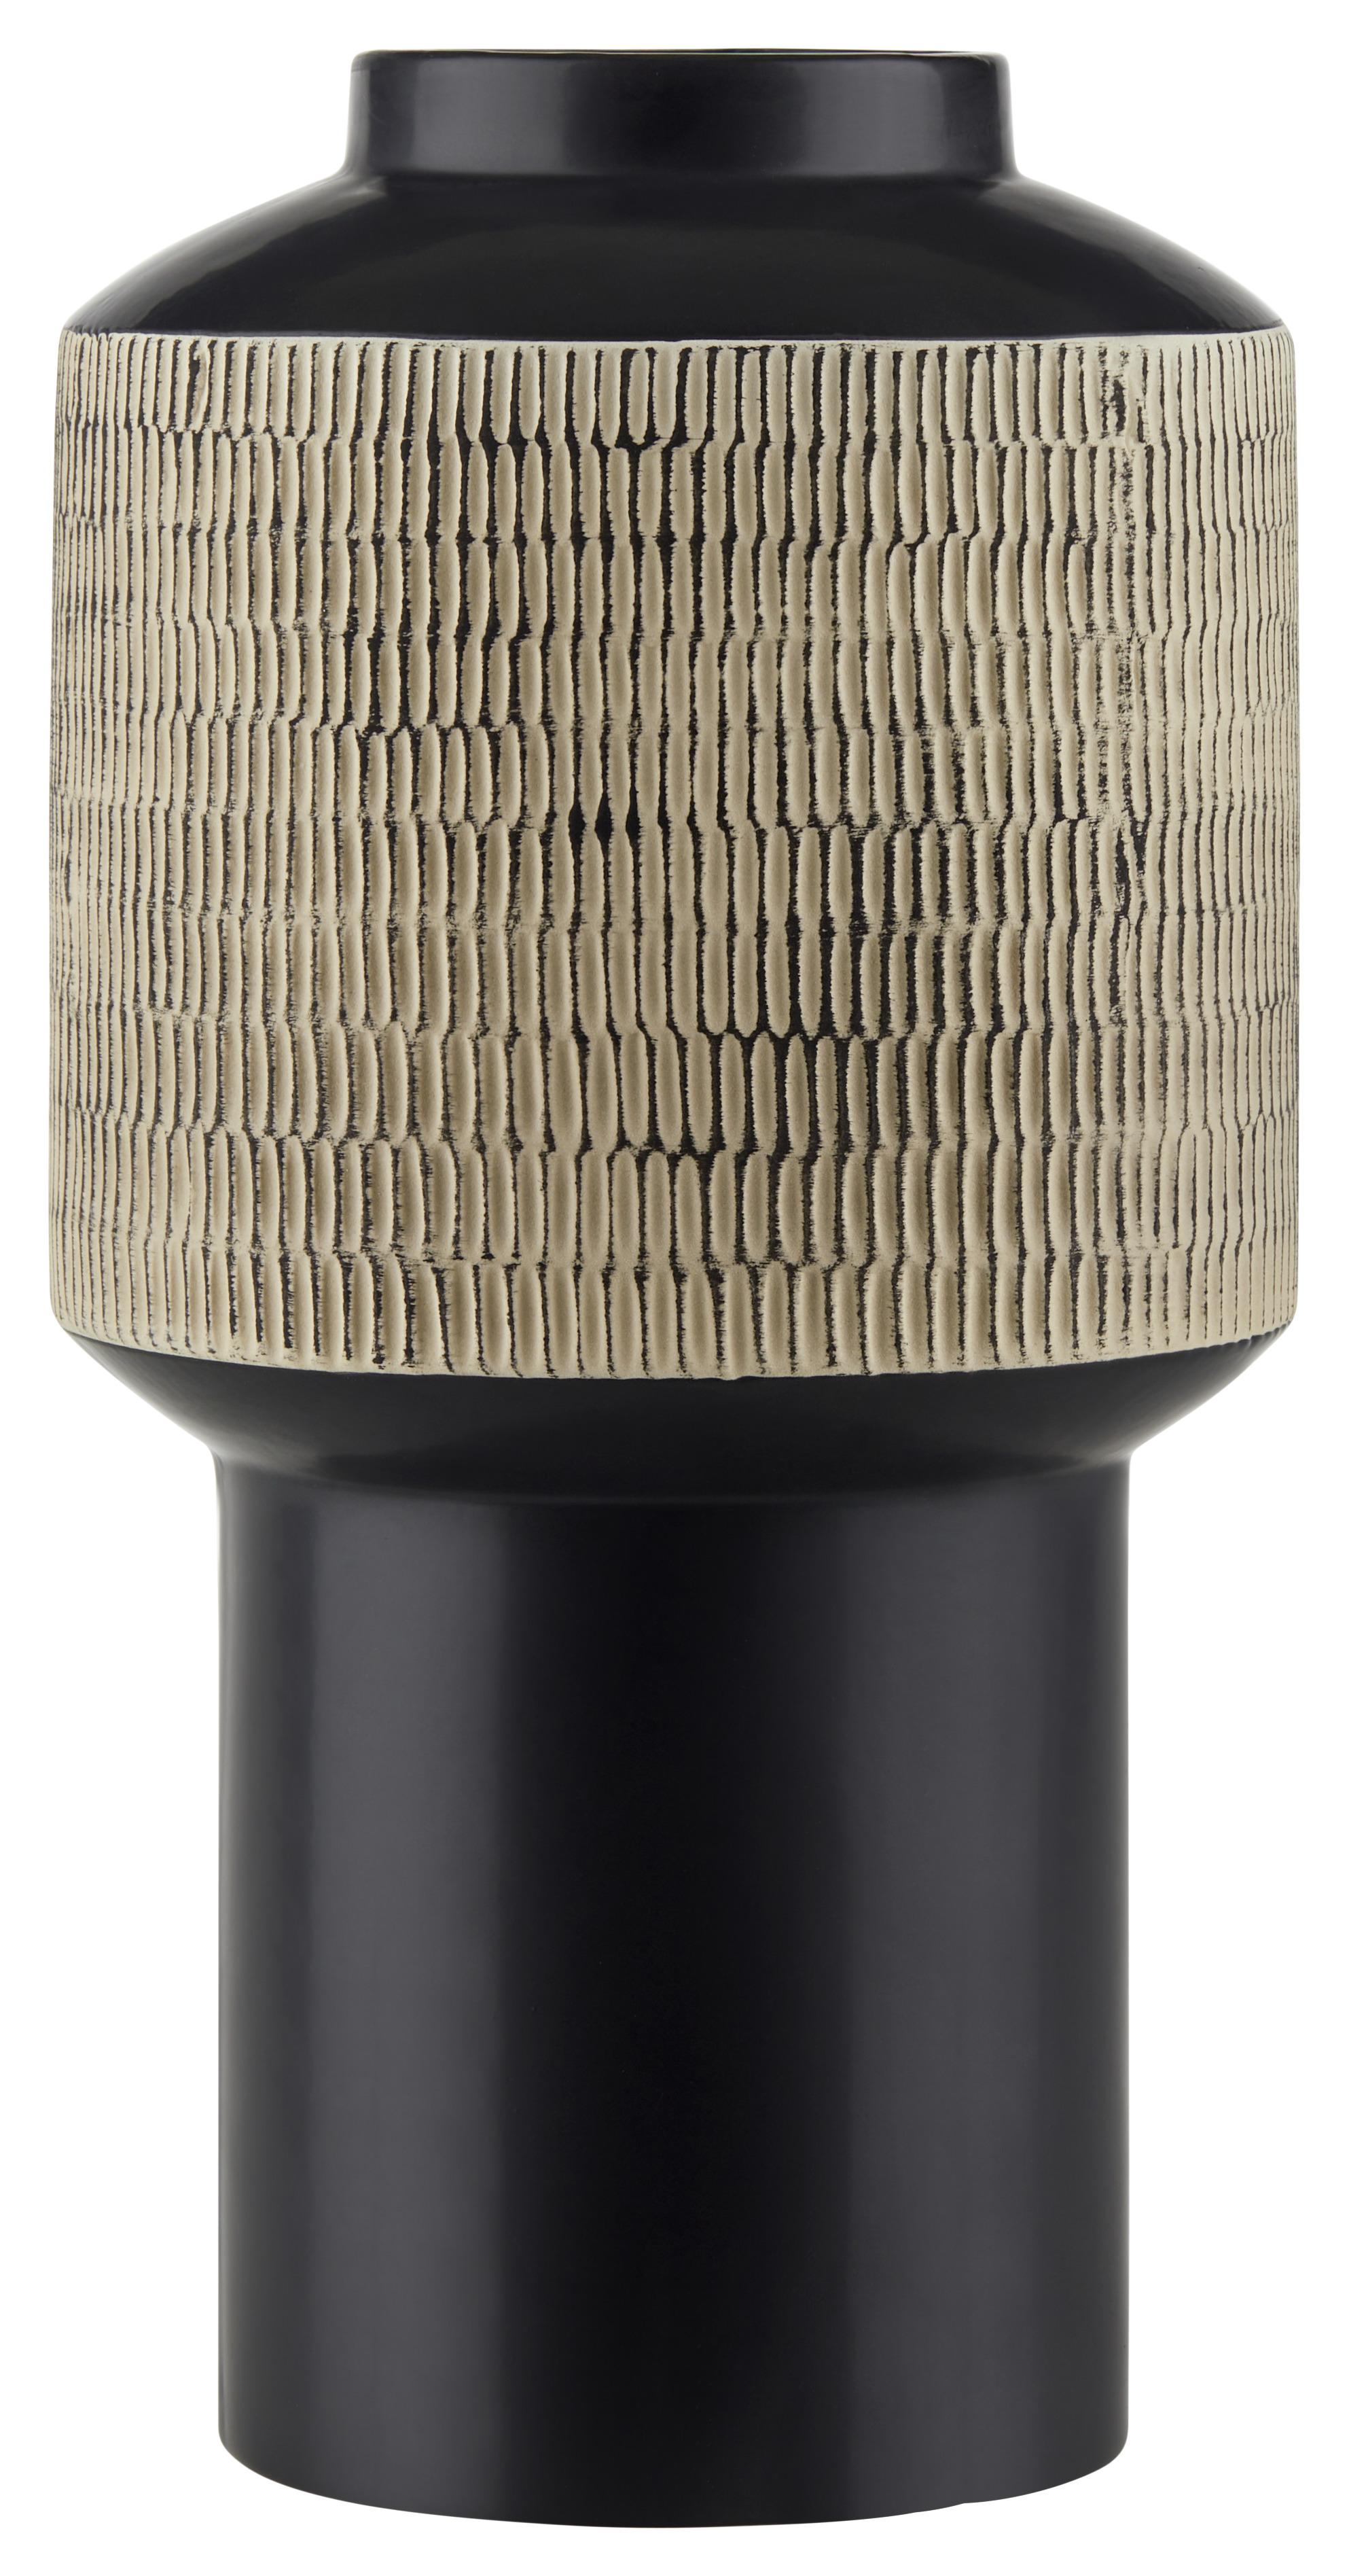 Vaza Akari -Paz- - črna/peščene barve, Konvencionalno, keramika (19,5/38cm) - Based